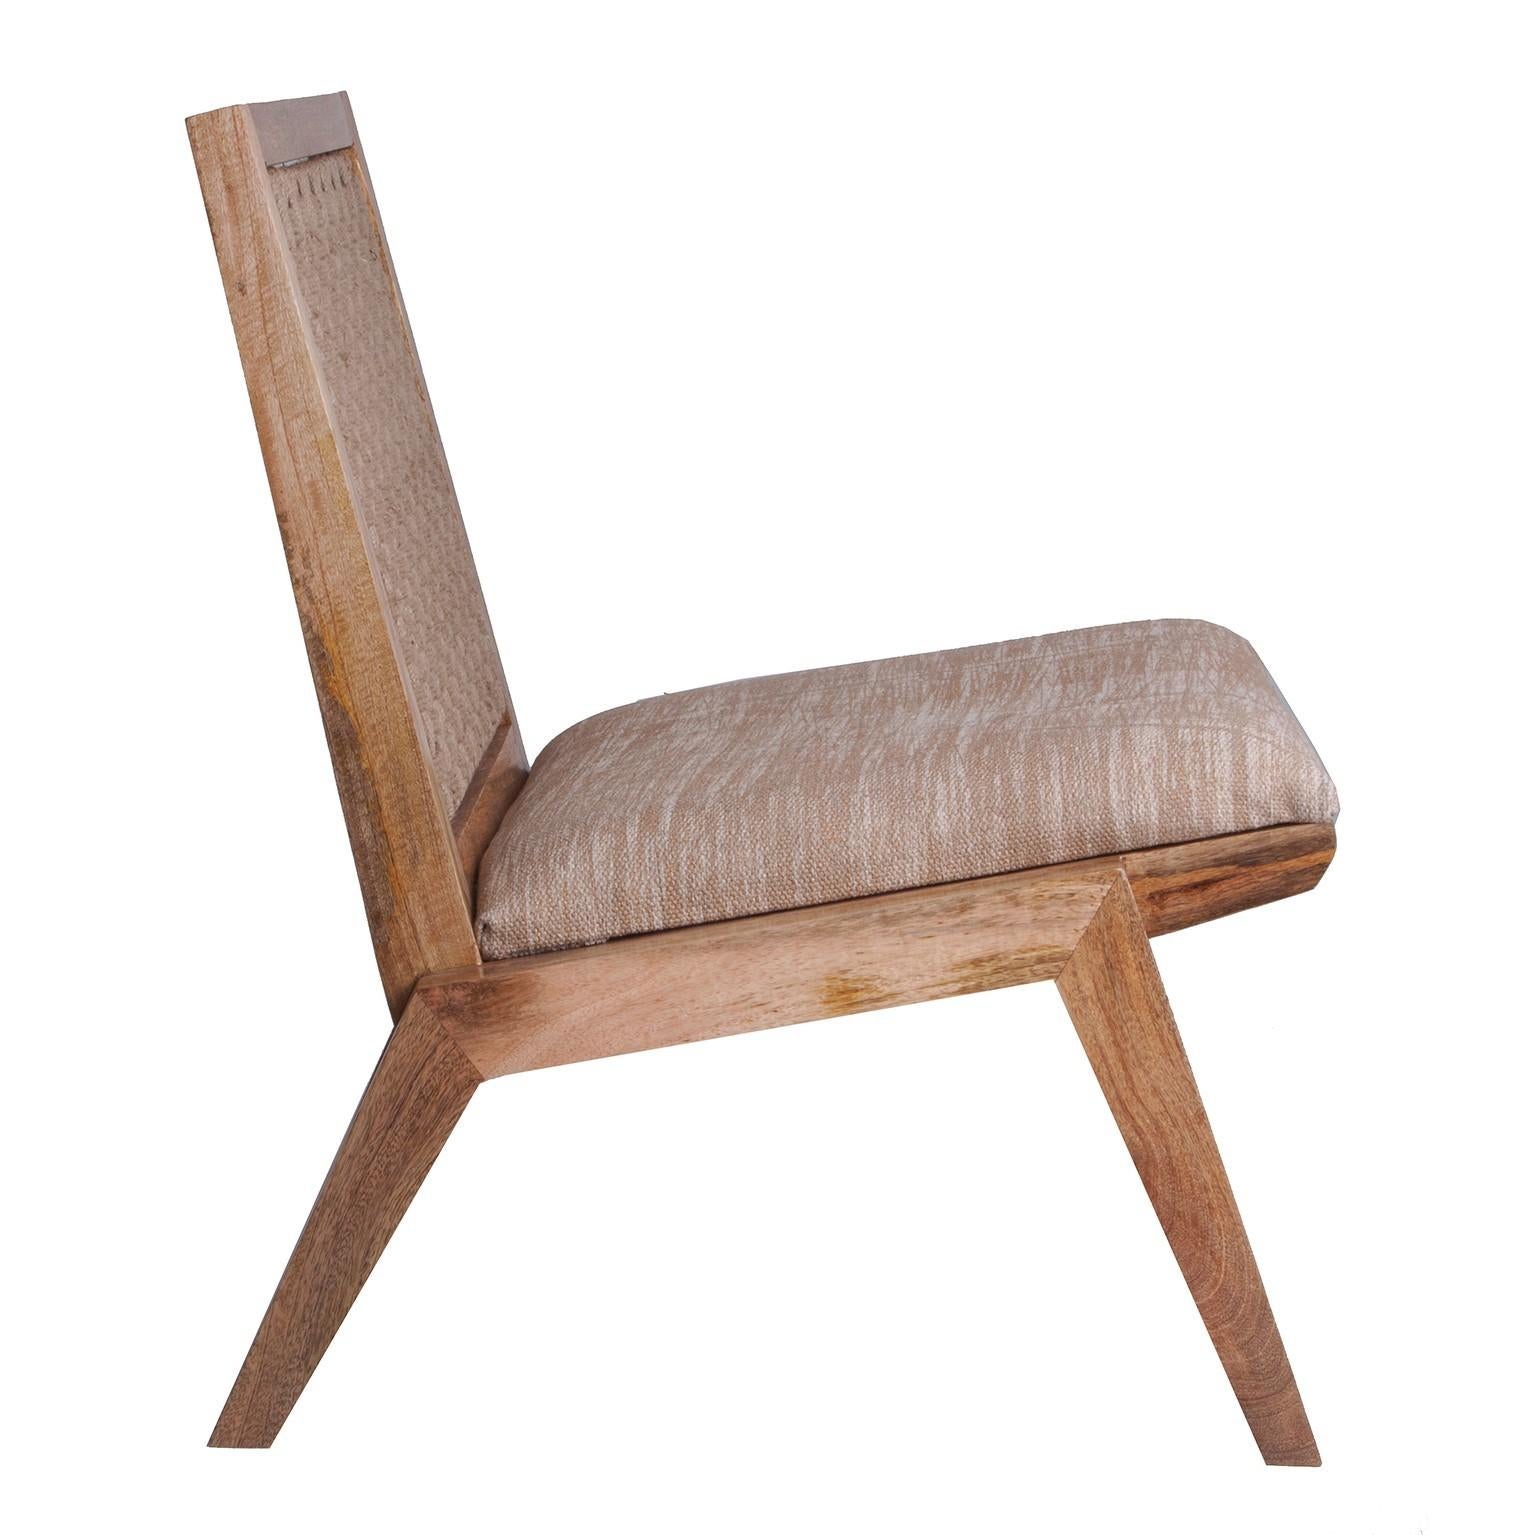 Scandinavian Modern Midcentury Design and Danish Look Wooden and Rope Lounge Armchair